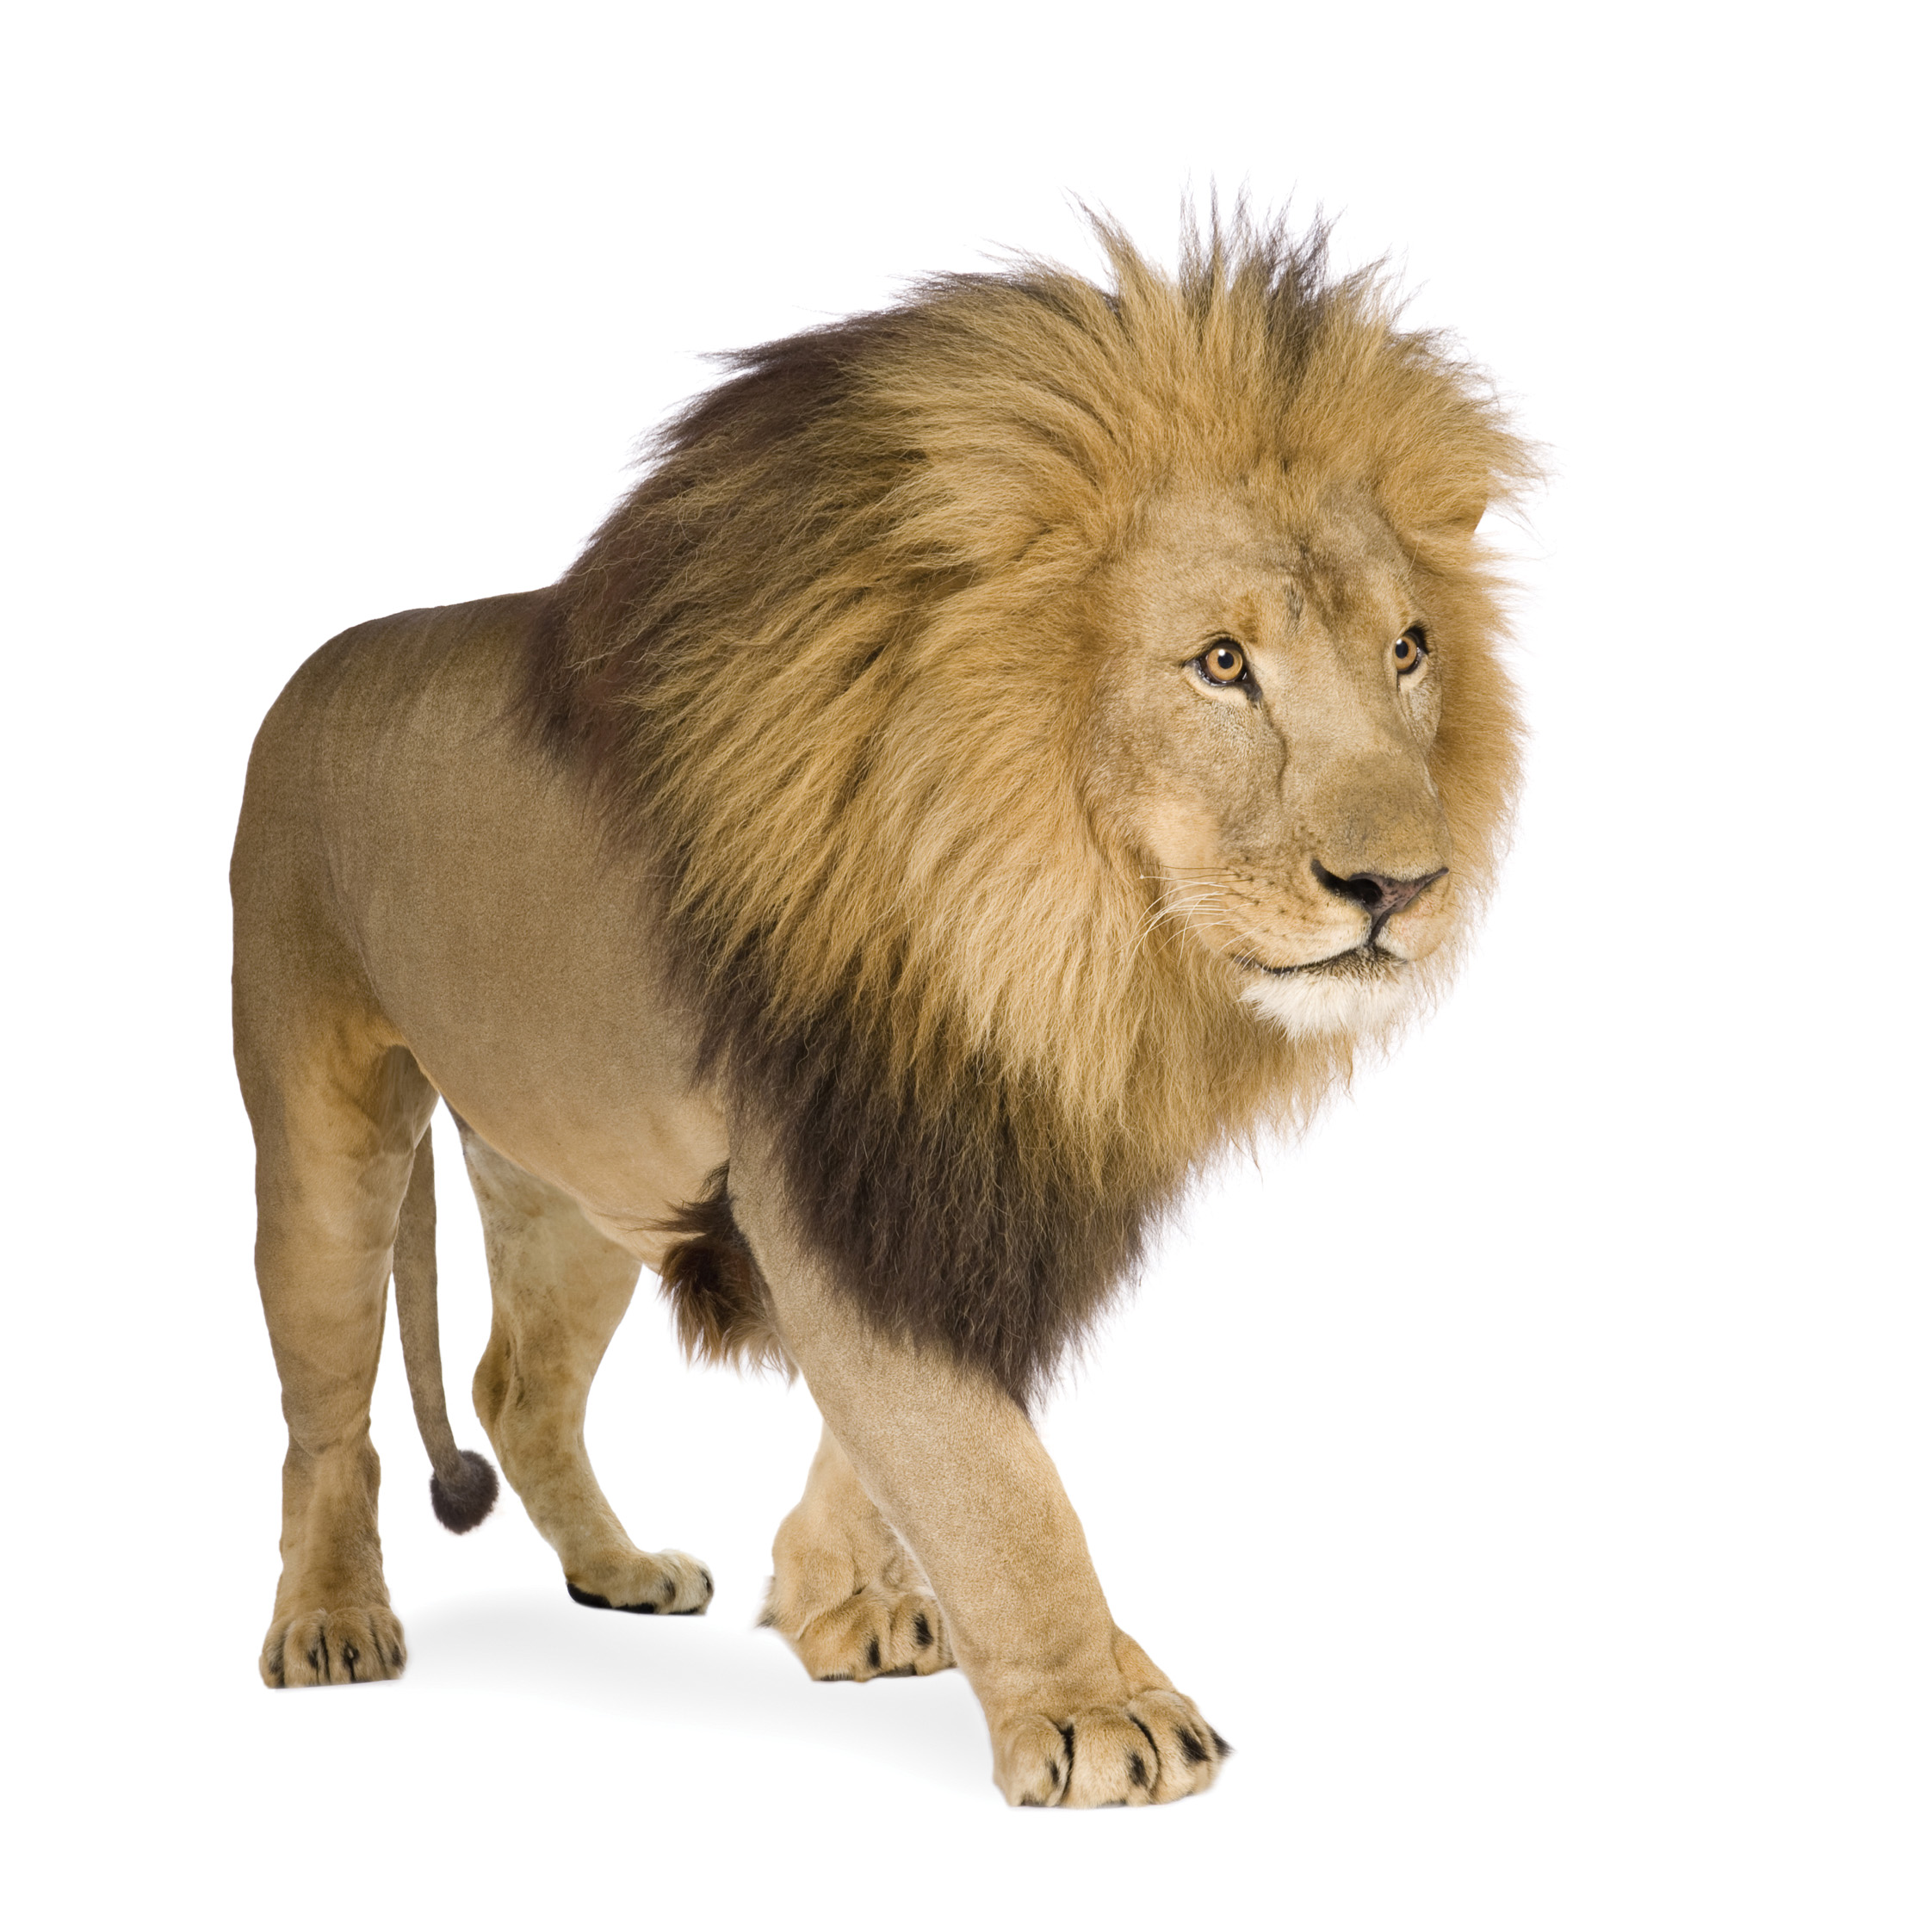 Lion White Background Pesquisa Google Safari